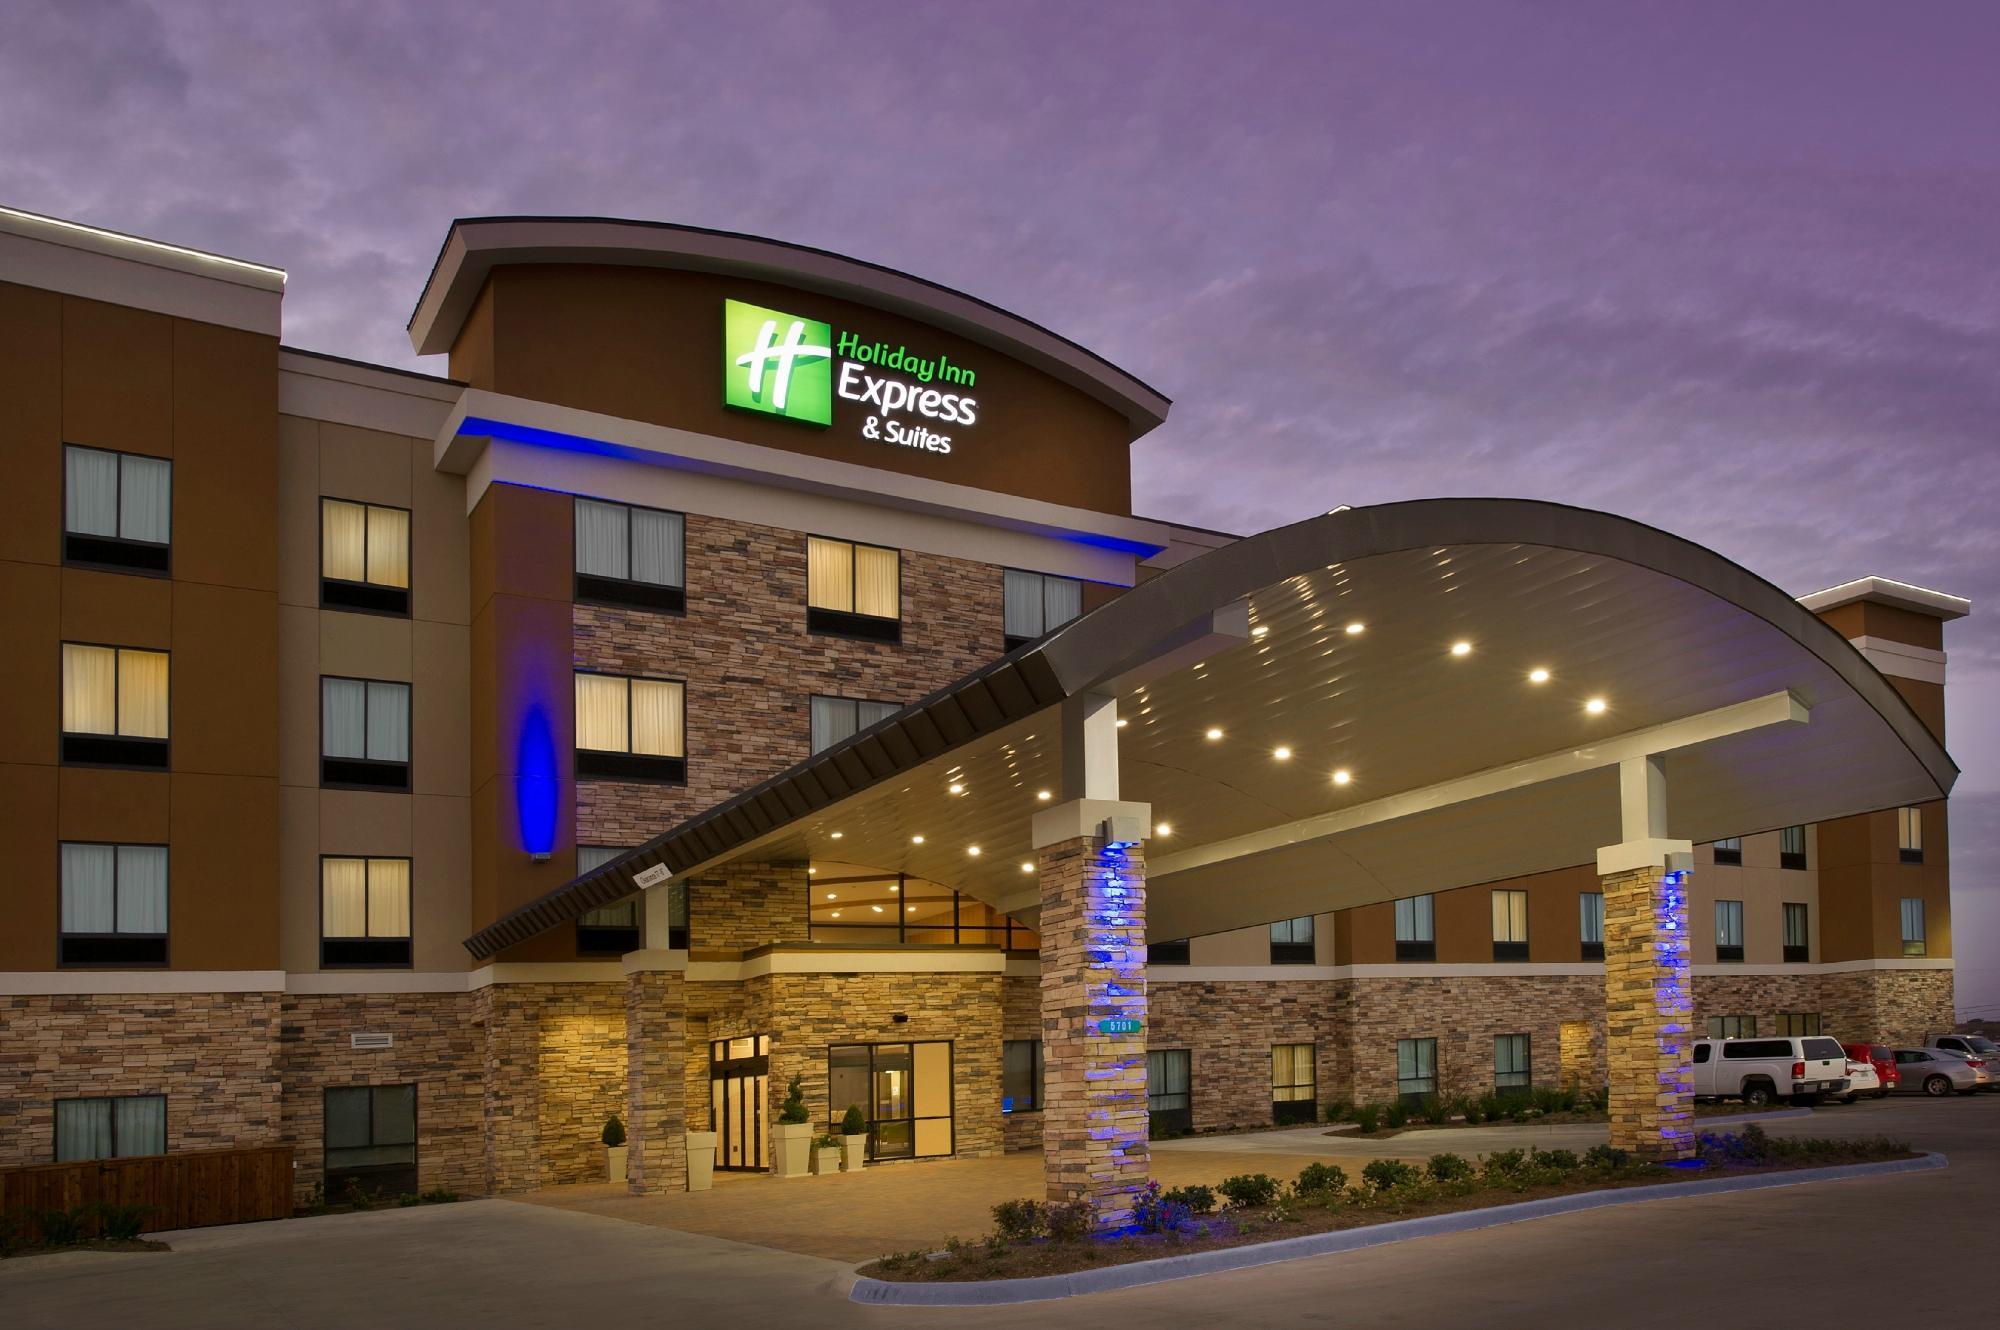 Photo of Holiday Inn Express & Suites Waco South, Waco, TX